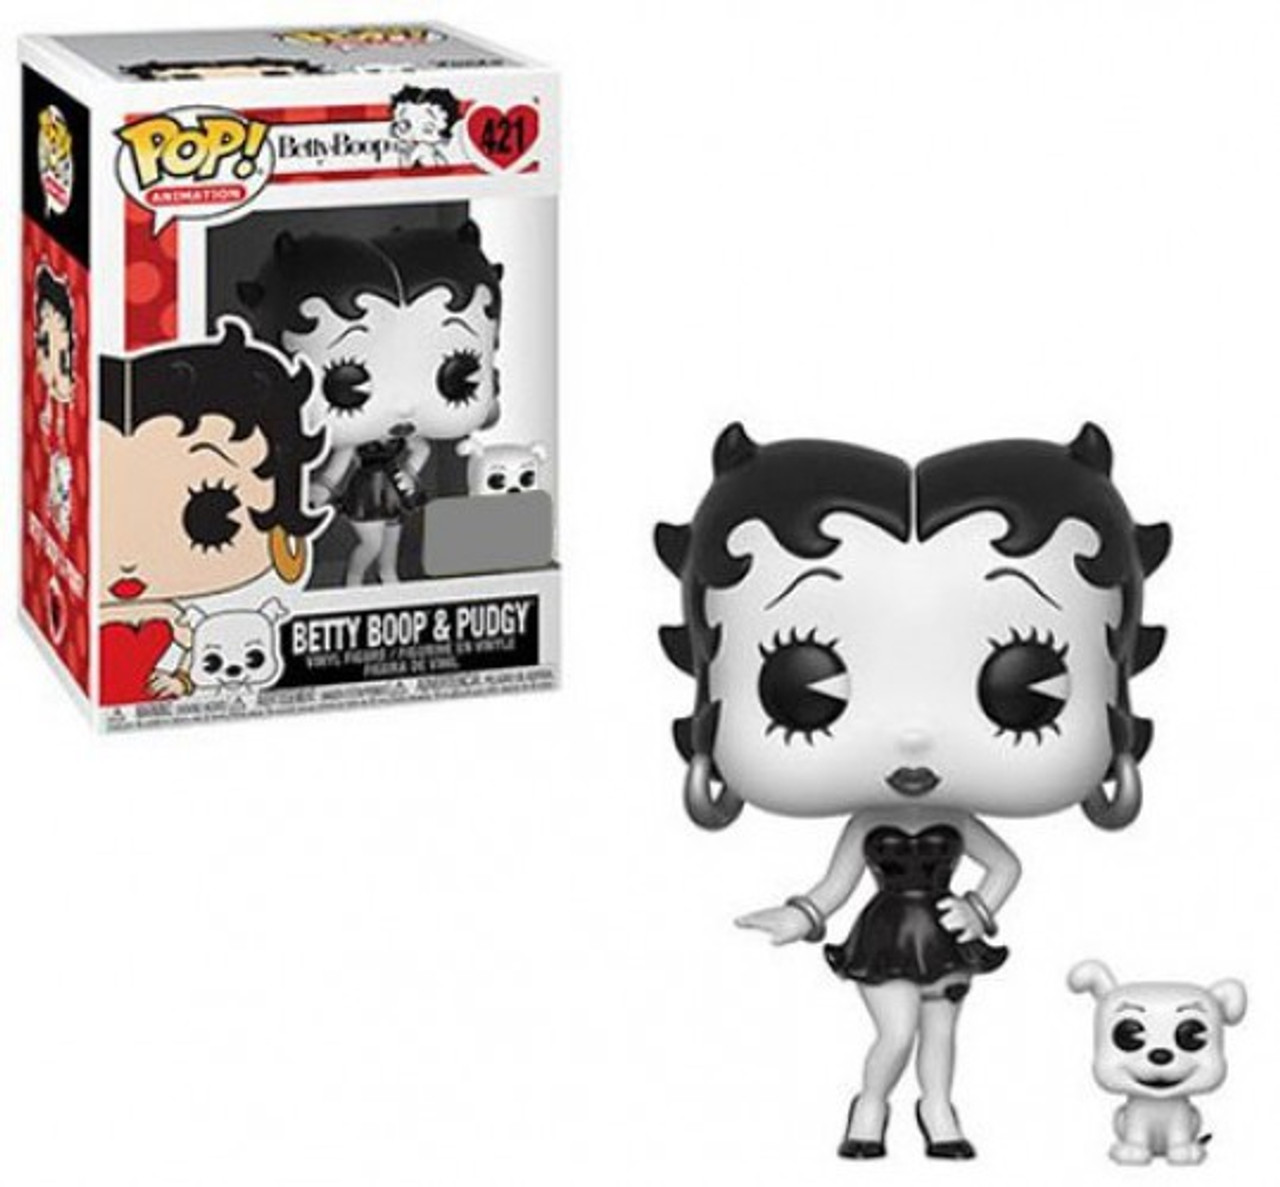 Funko Betty Boop Pop Animation Betty Boop Pudgy Exclusive Vinyl Figure 421 Black White Toywiz - funko pop roblox noob